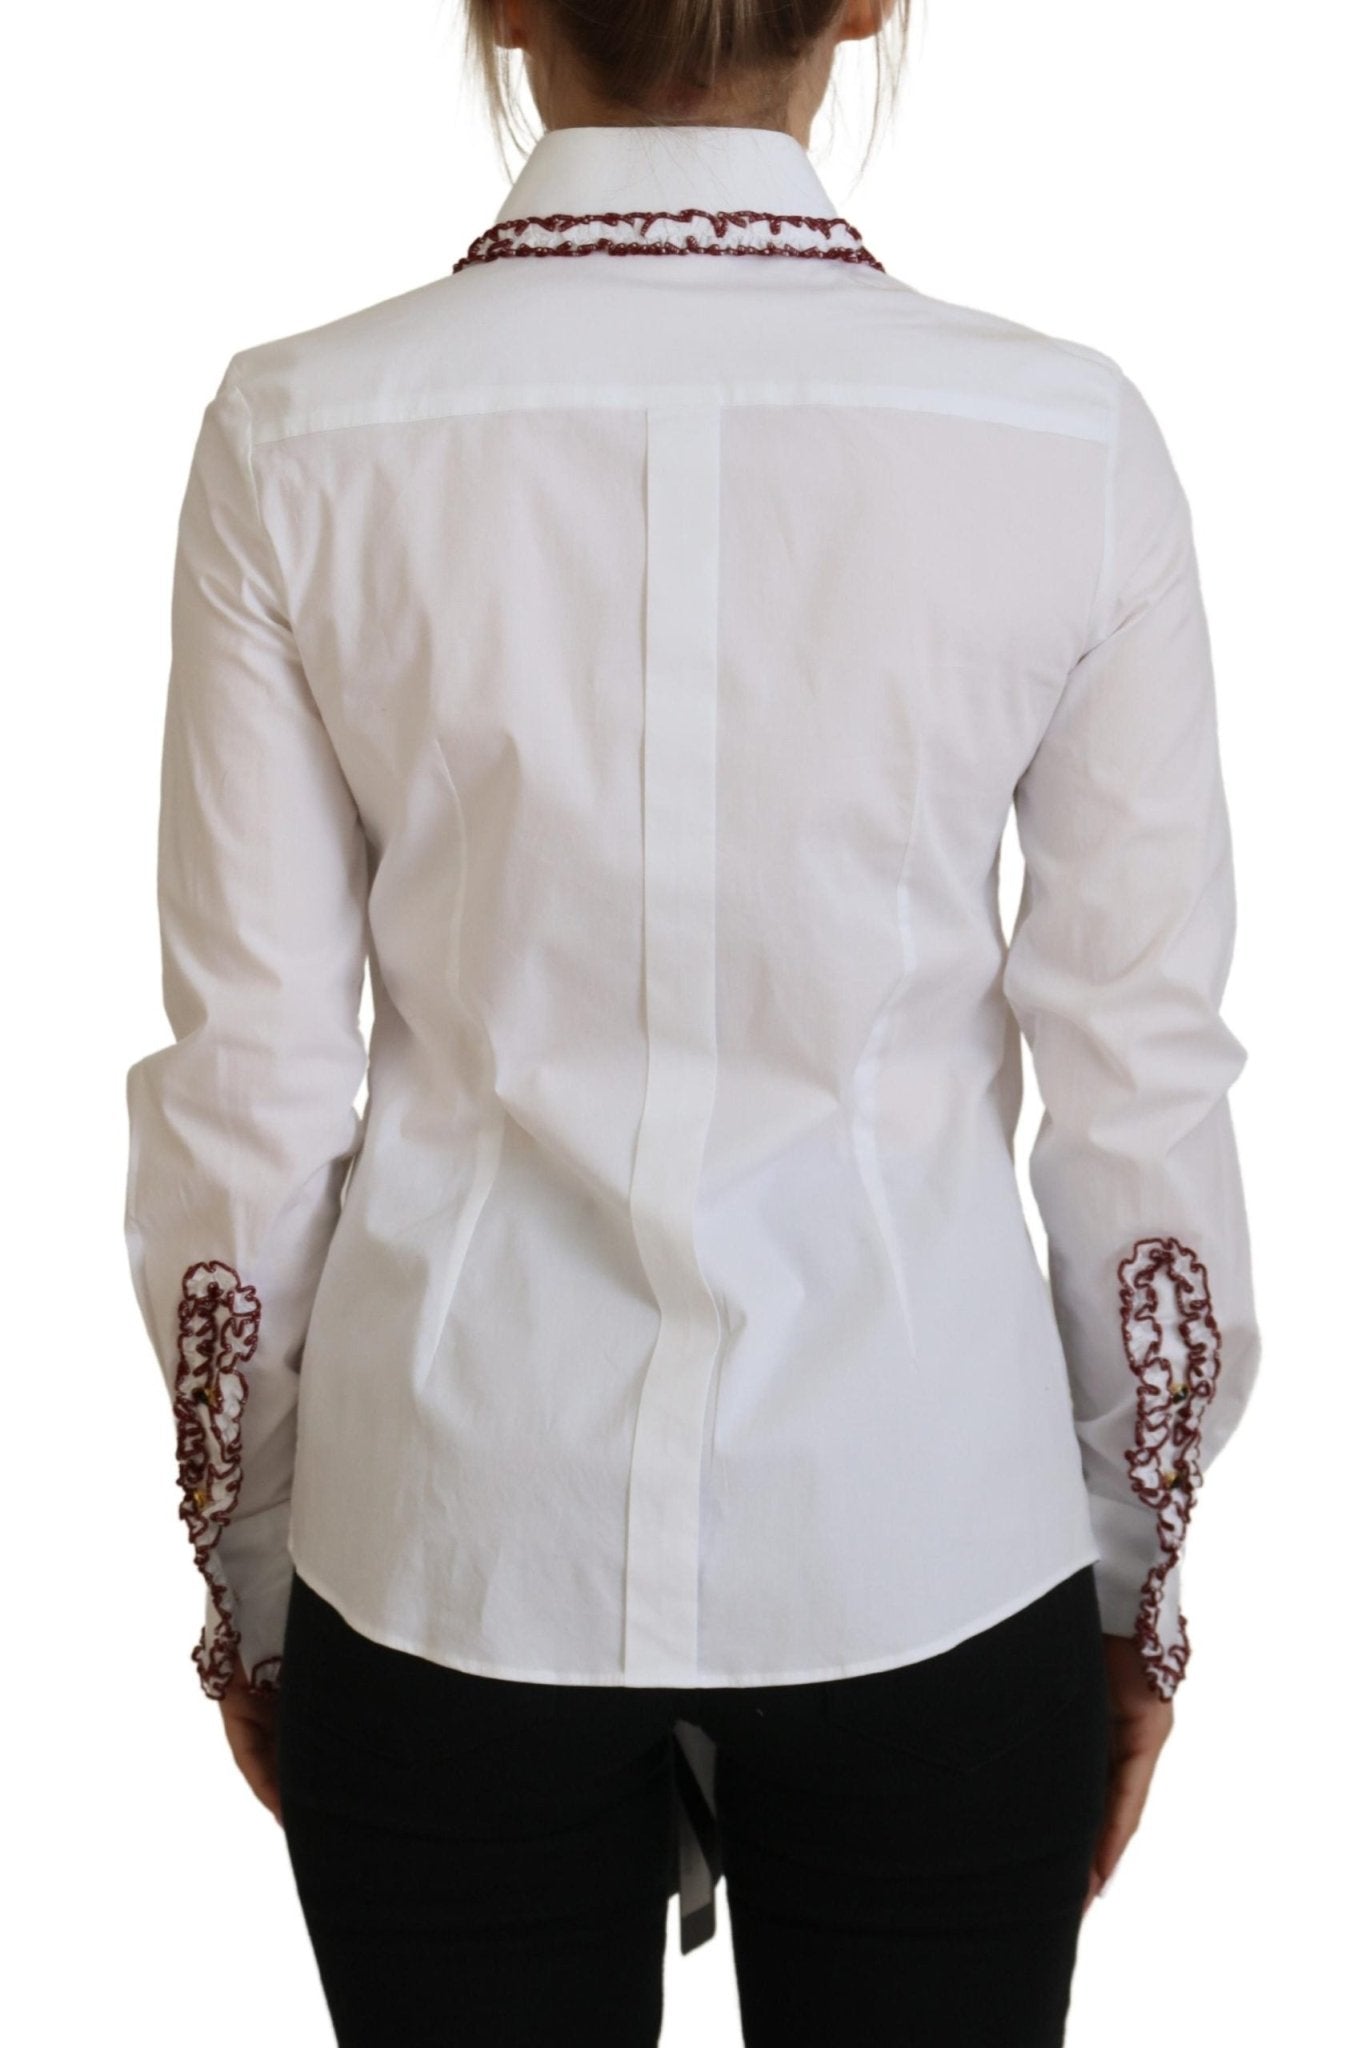 Dolce & Gabbana White Lace Long Sleeves Ruffle Collar Top